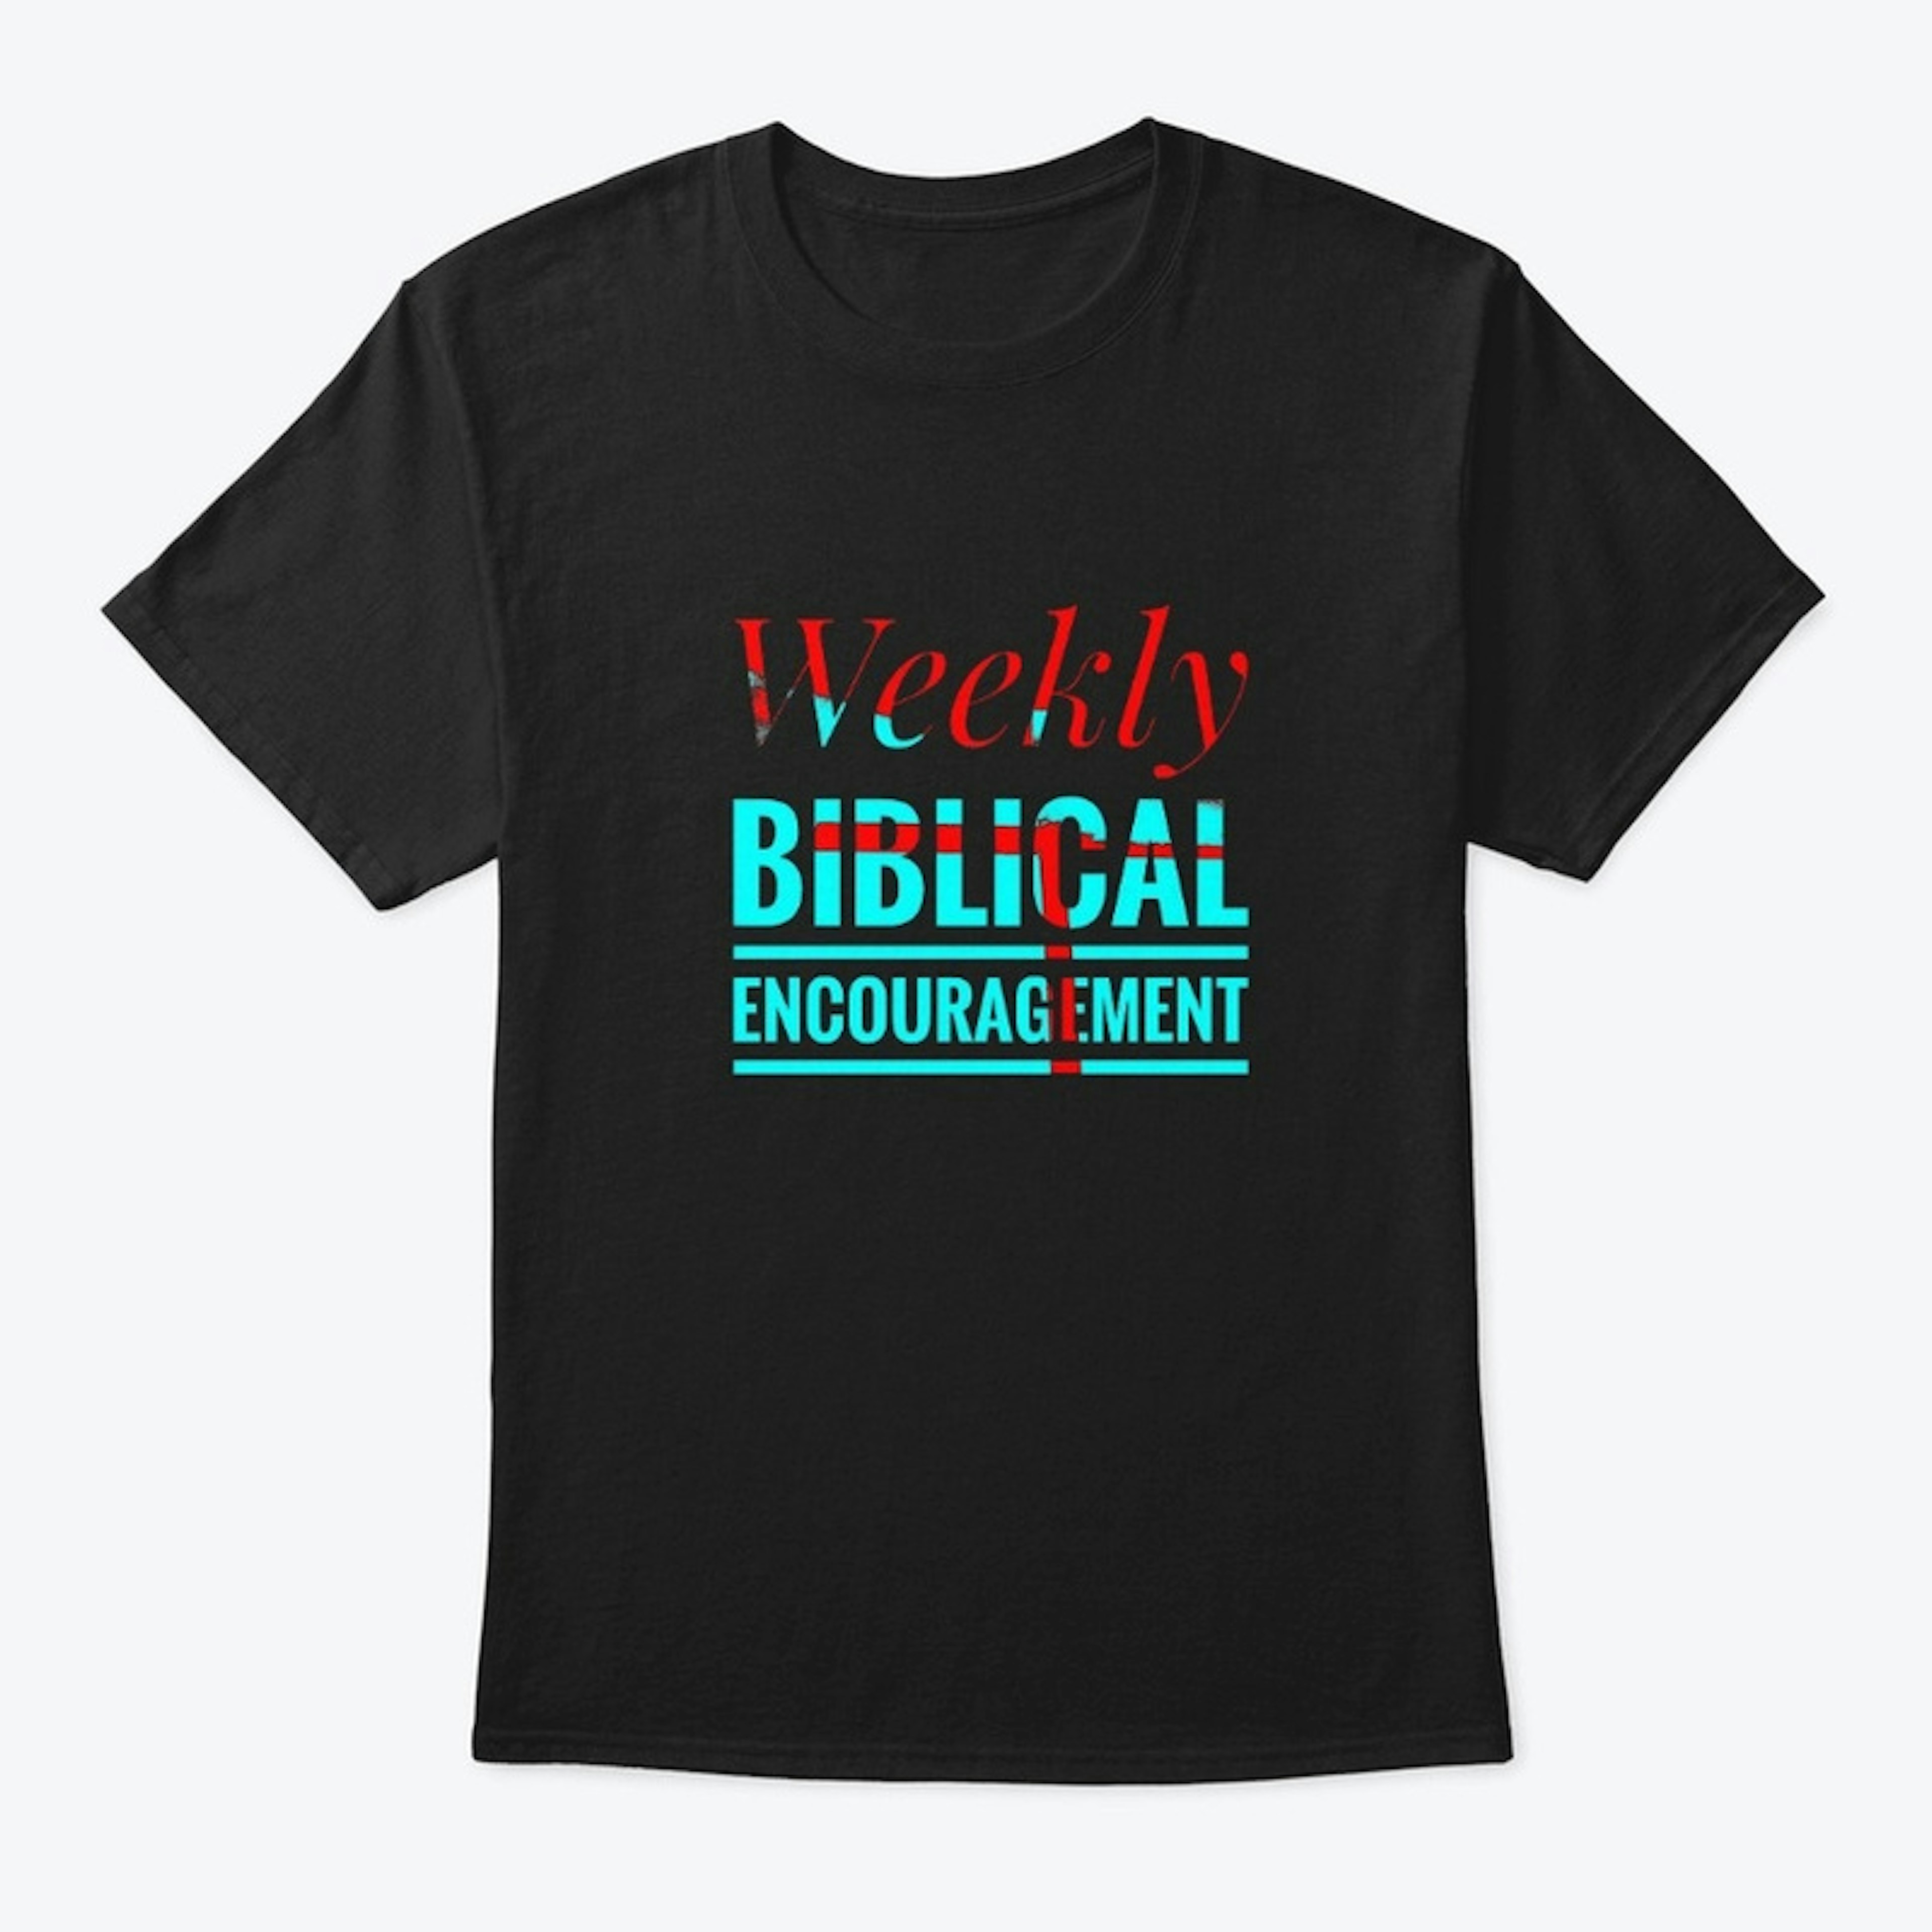 Weekly Biblical Encouragement first logo